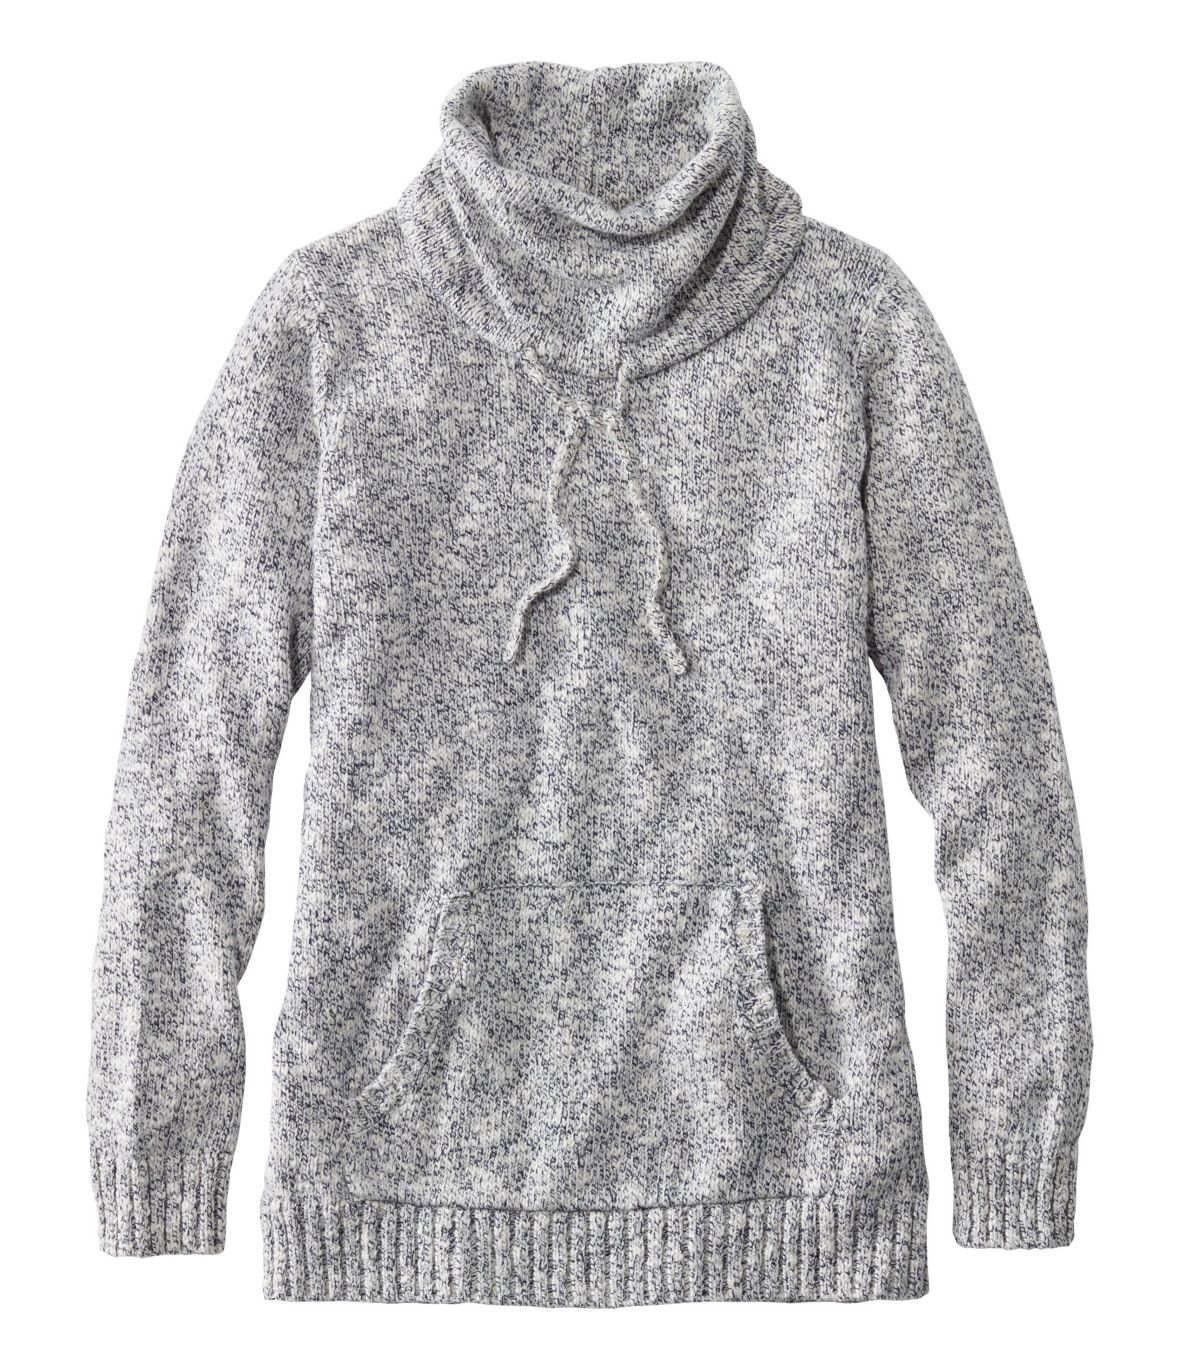 Women's Cotton Ragg Sweater, Cowl Pullover